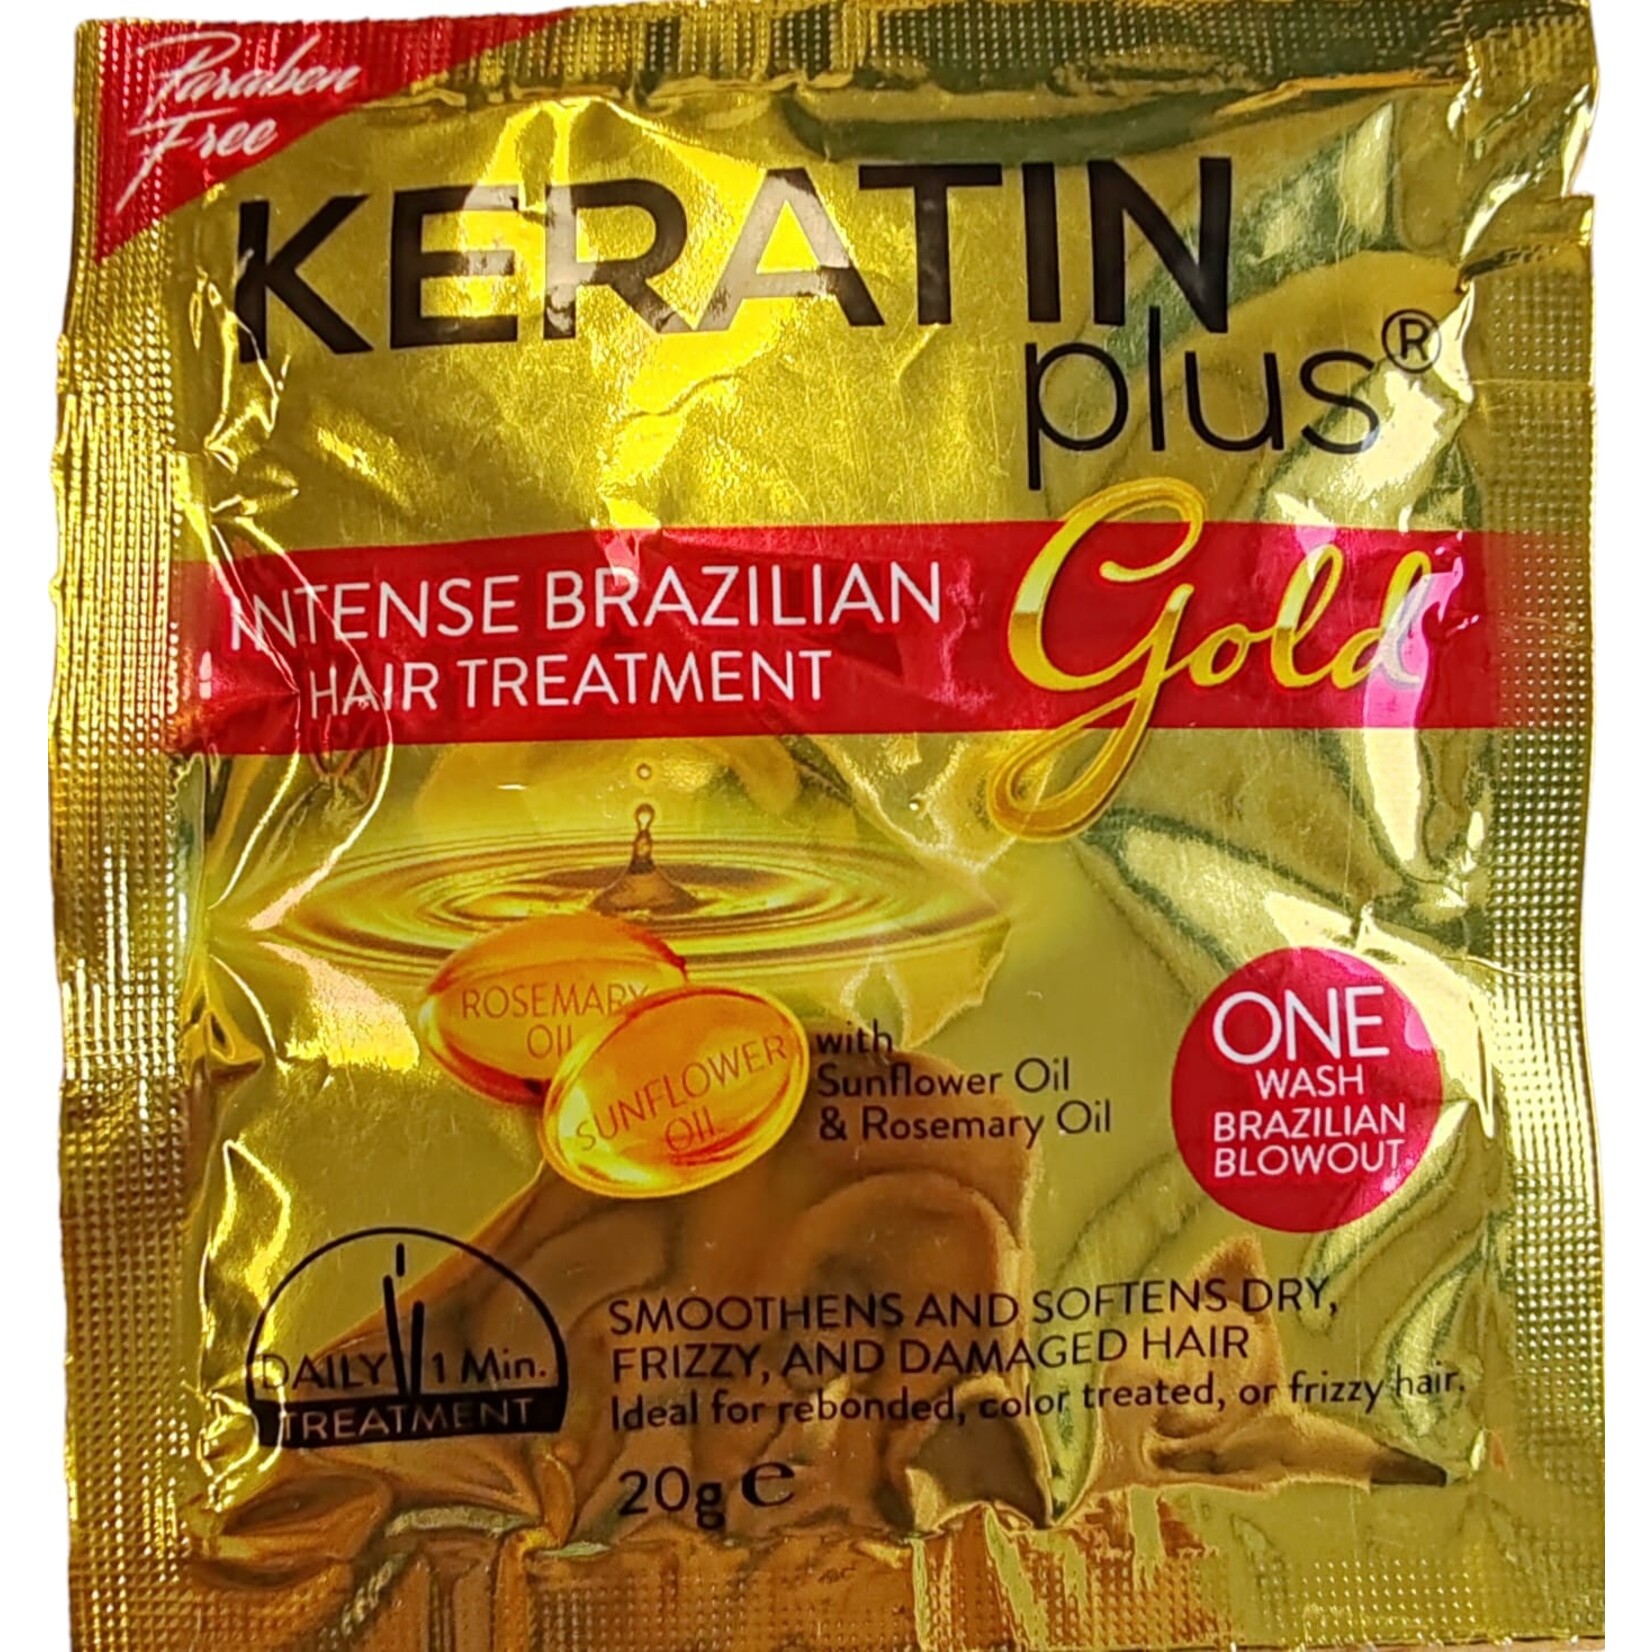 Keratin Plus Keratin Plus Intense Brazilian Hair Treatment, 20 grams FREE